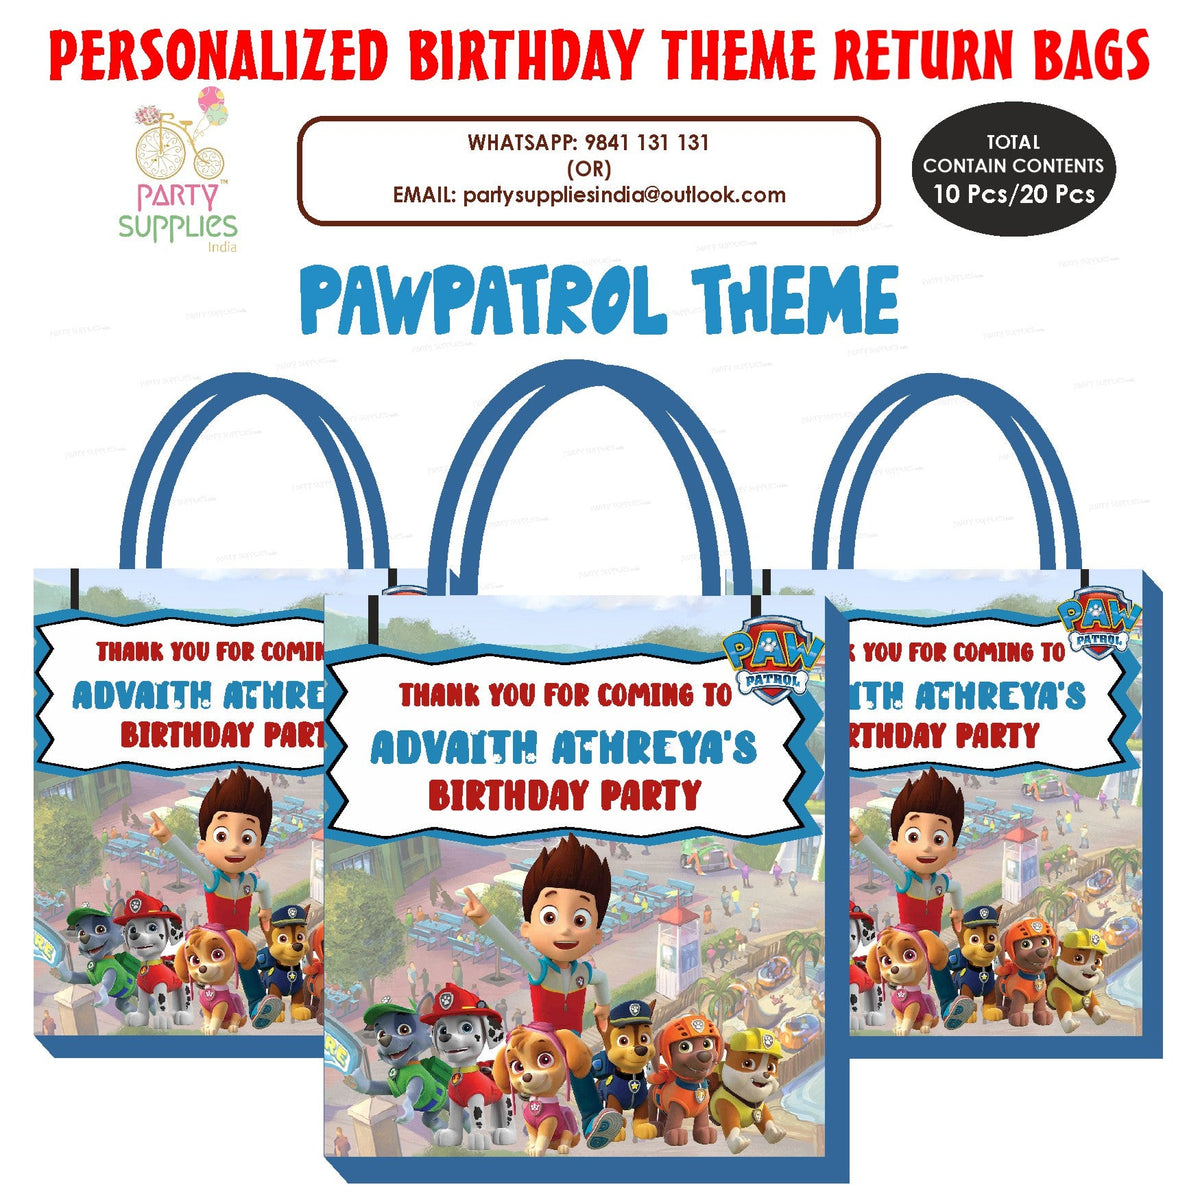 PSI Paw Patrol Theme Return Gift Bag